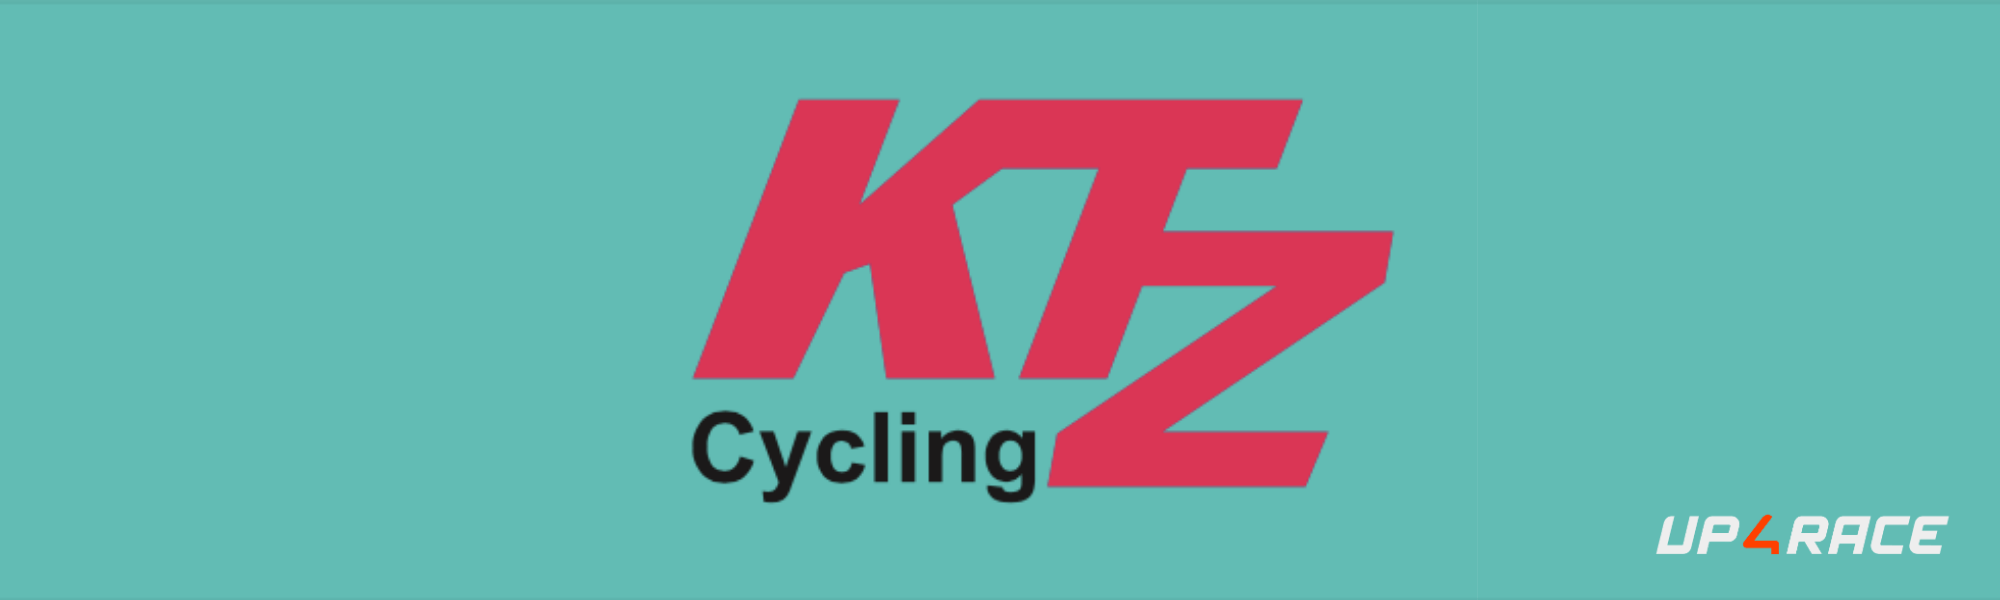 VENTA ESPECIAL KTZ CYCLING